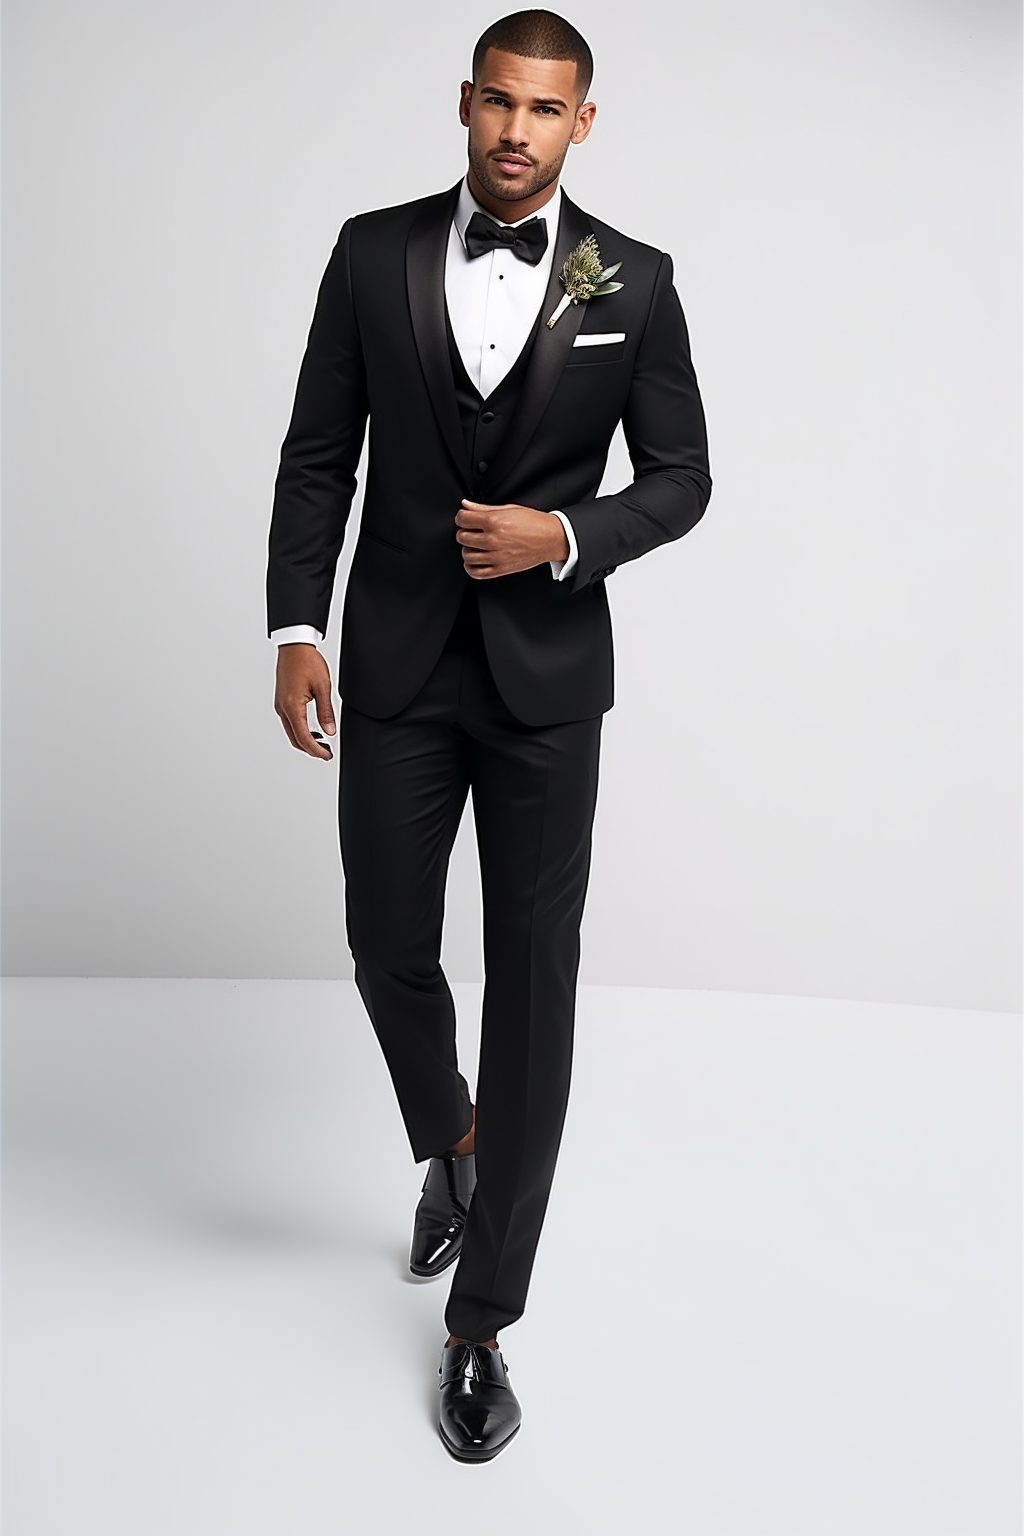 Men's Classic Black Shawl Lapel 3-Piece Tuxedo - Sleek Wedding and